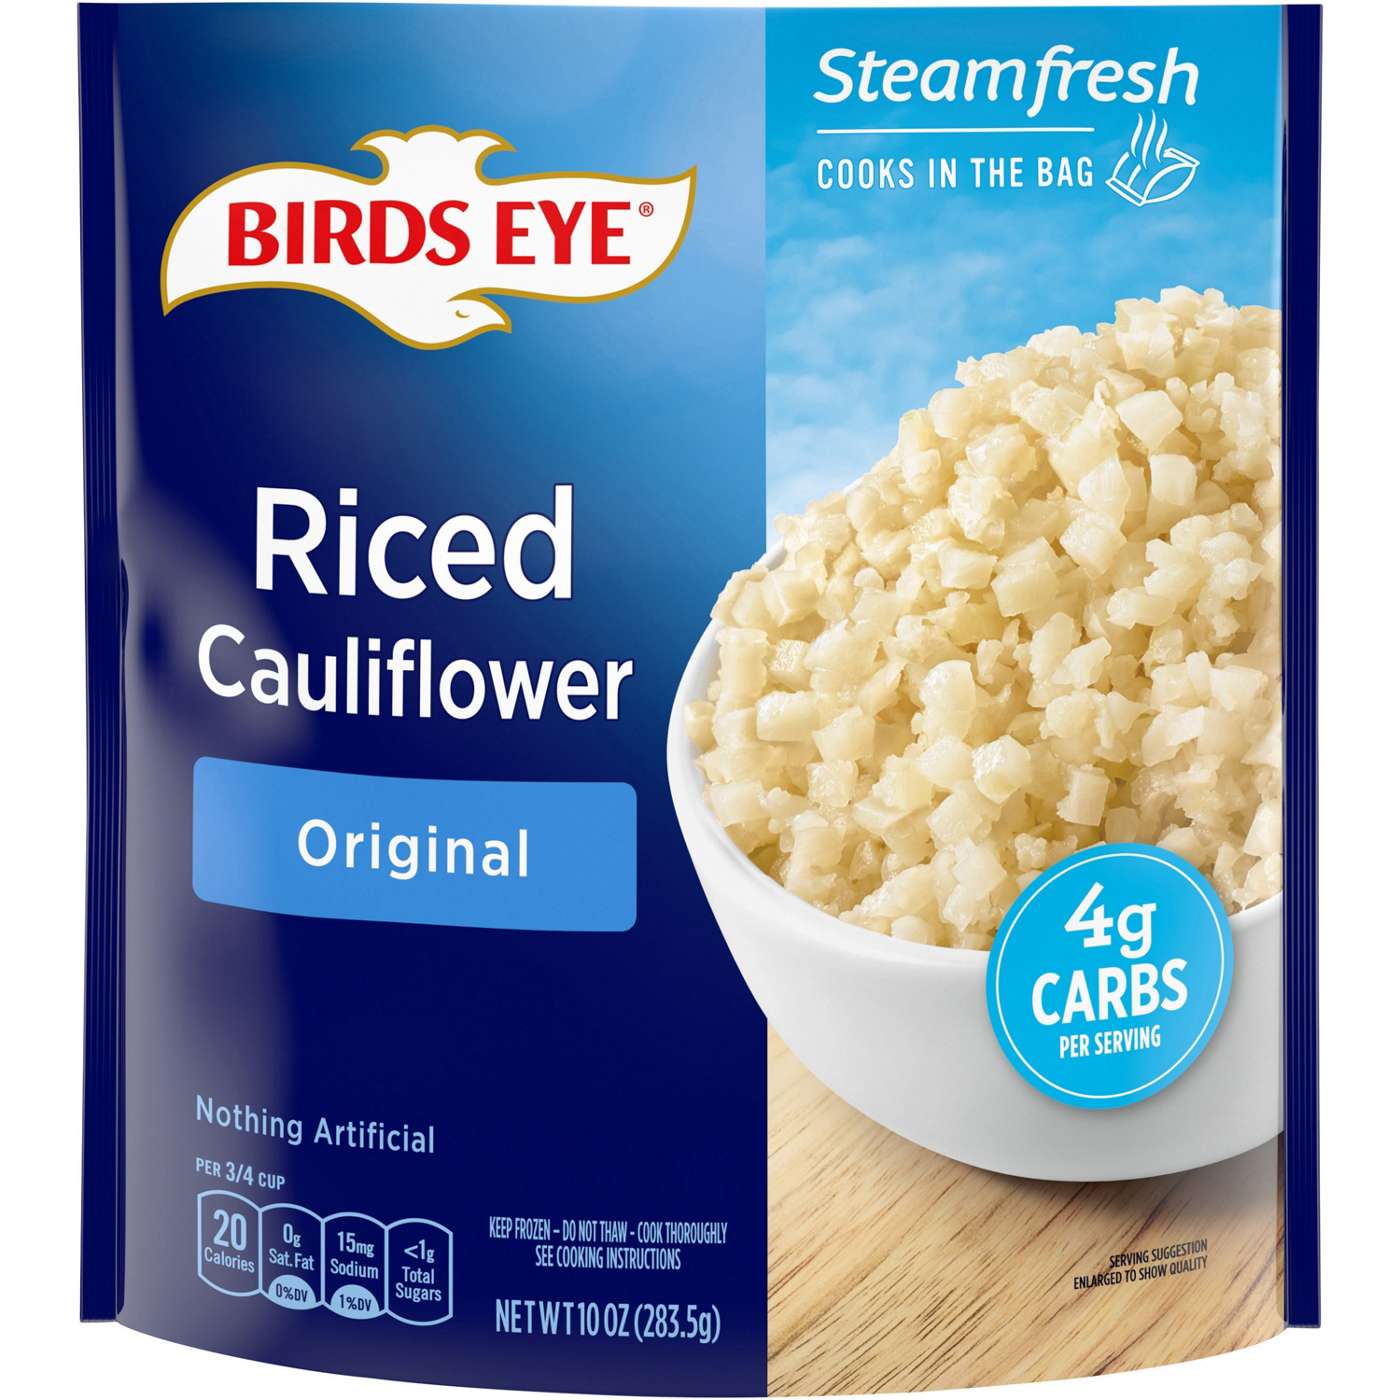 Birds Eye Frozen Steamfresh Riced Cauliflower - Original; image 1 of 7